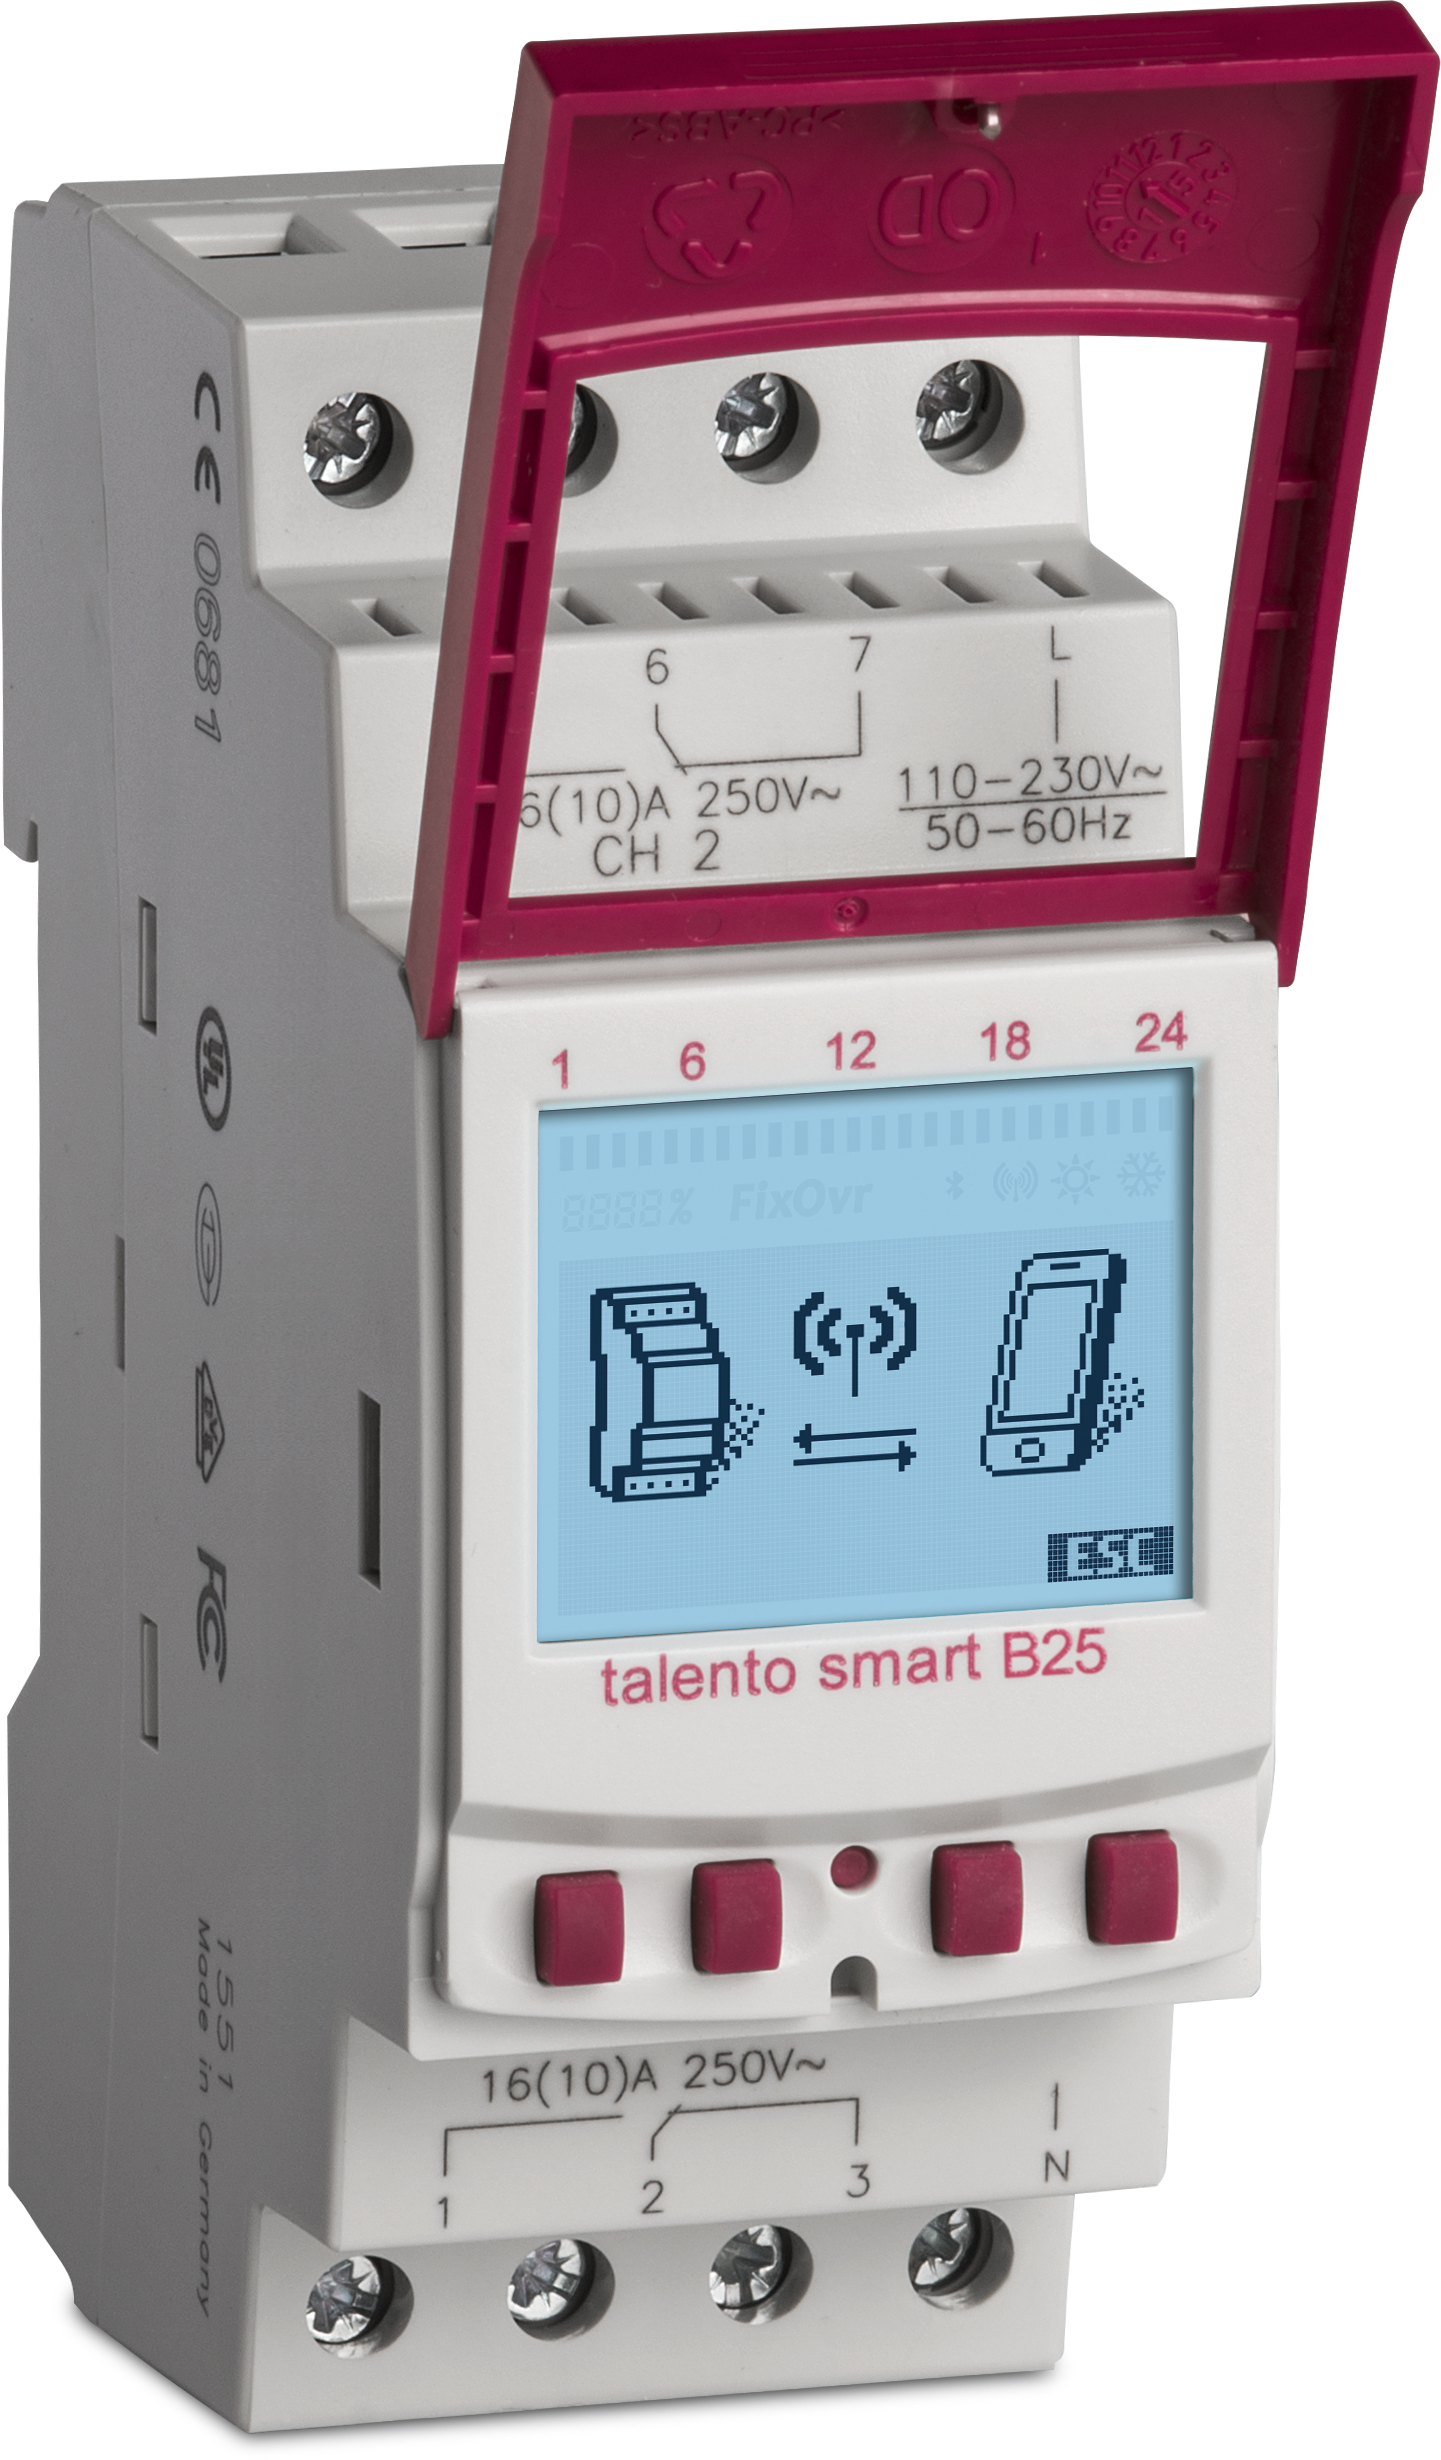 TALENTO SMART B25 реле, bluetooth, 2 channel, 100 ячеек памяти, 16A, 110/230V AC Функции: Вкл/выкл